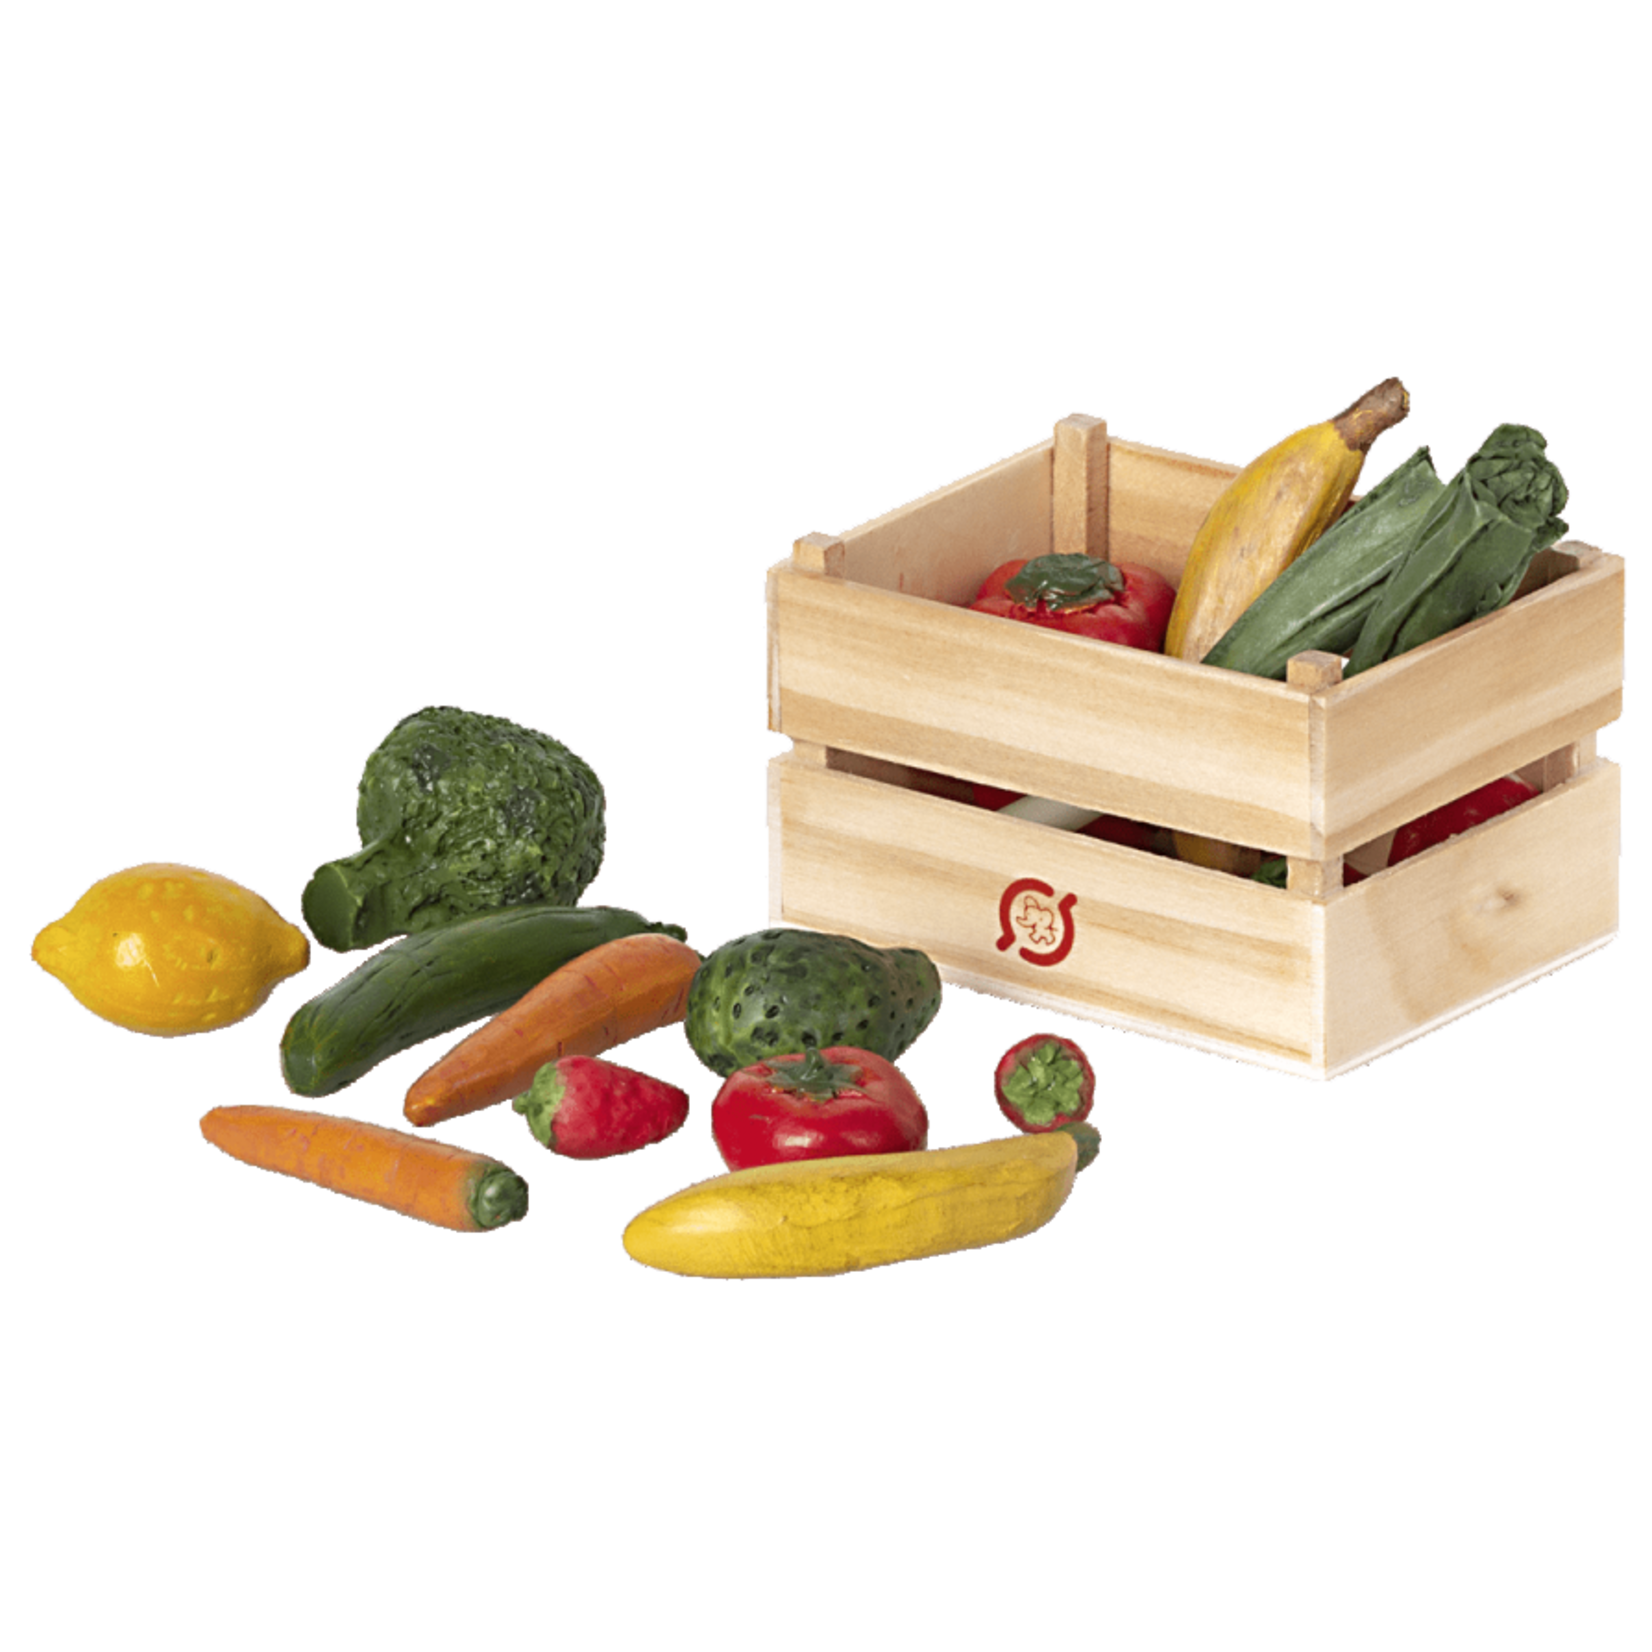 Maileg Maileg veggies and fruits in crate